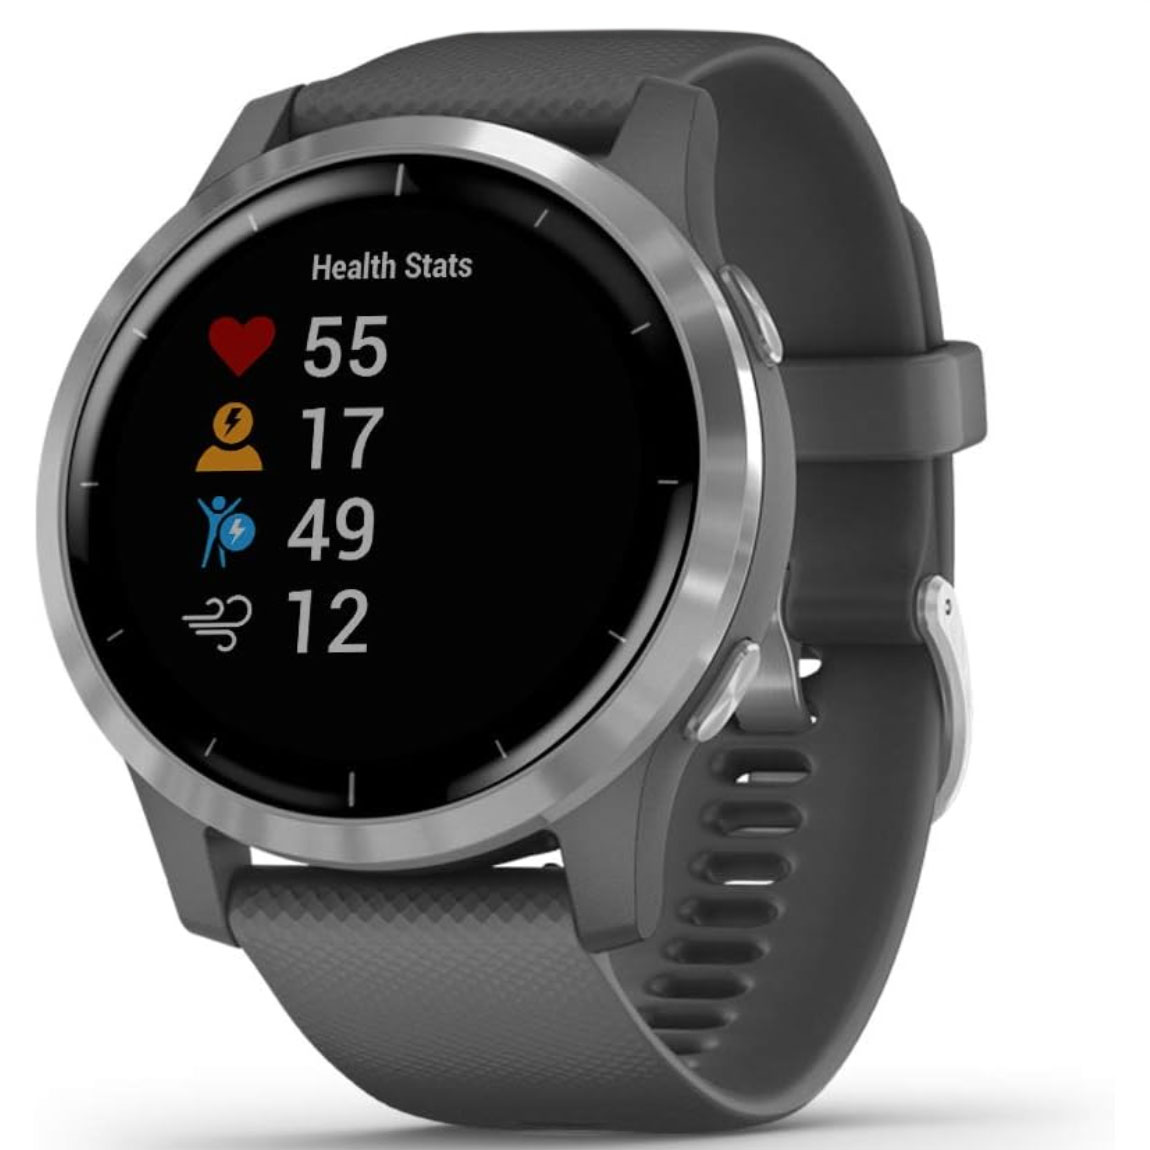 Silver Garmin smartwatch with health status display